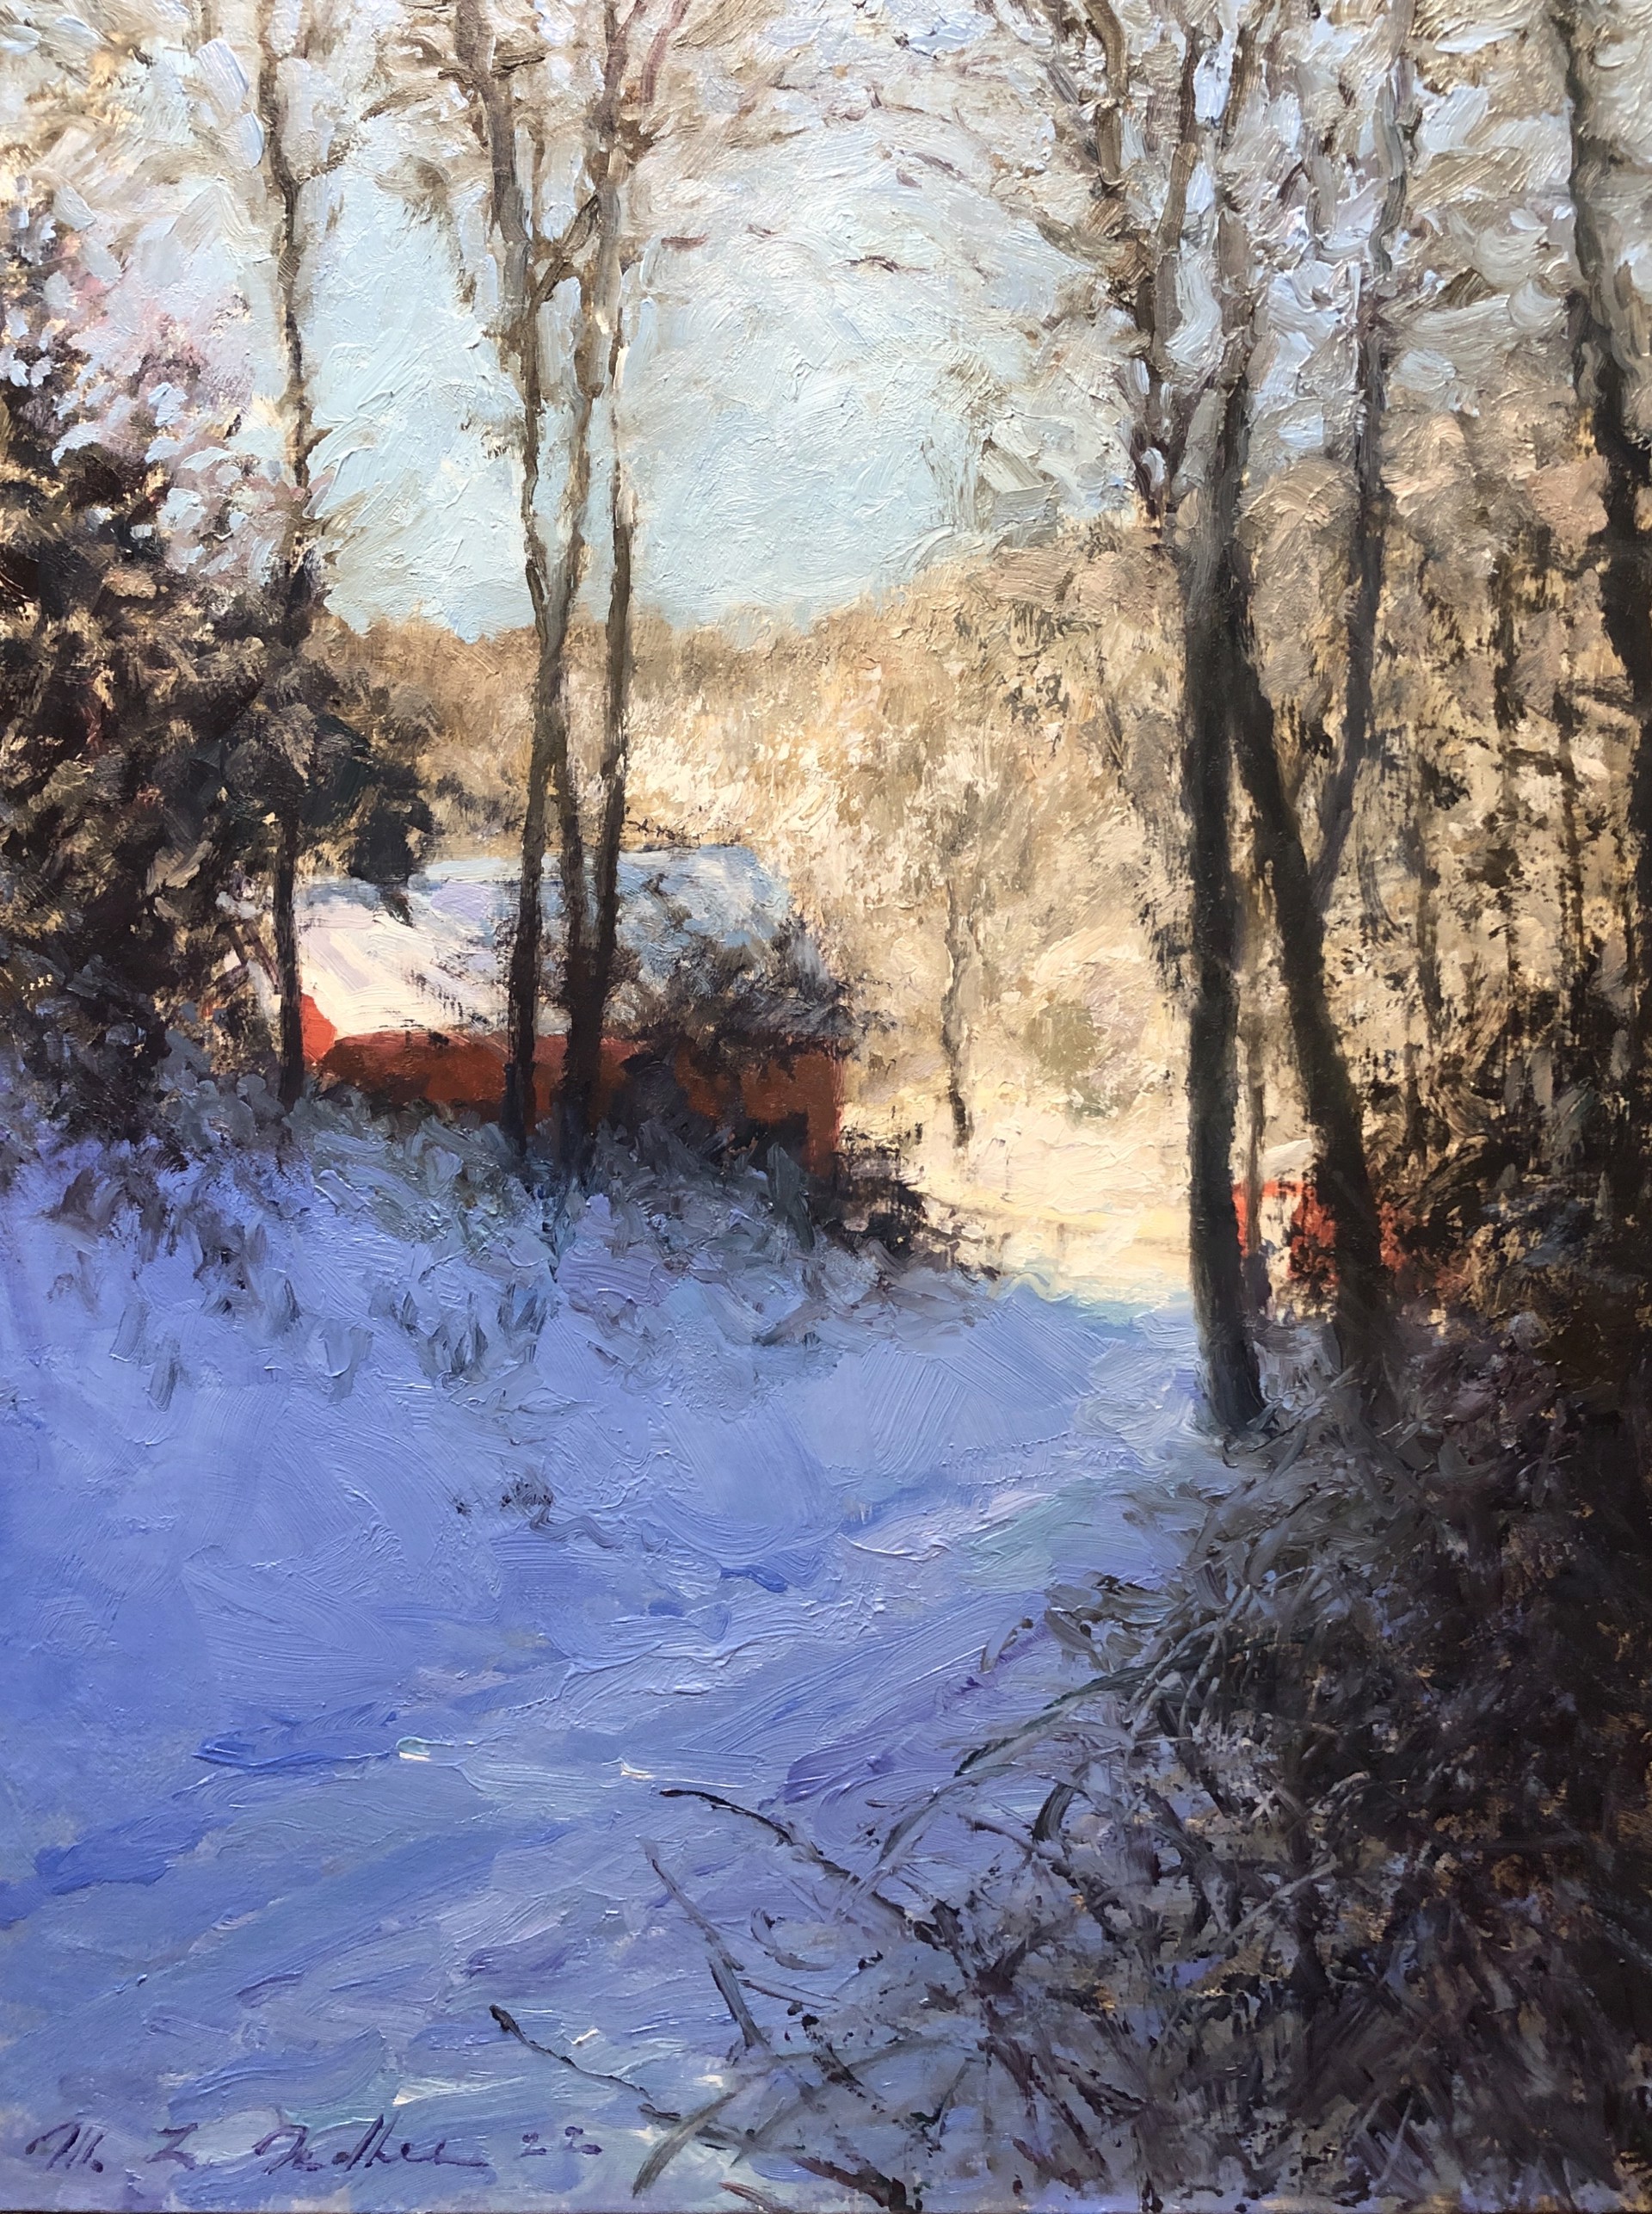 Road to Owenby's by Mitch Kolbe